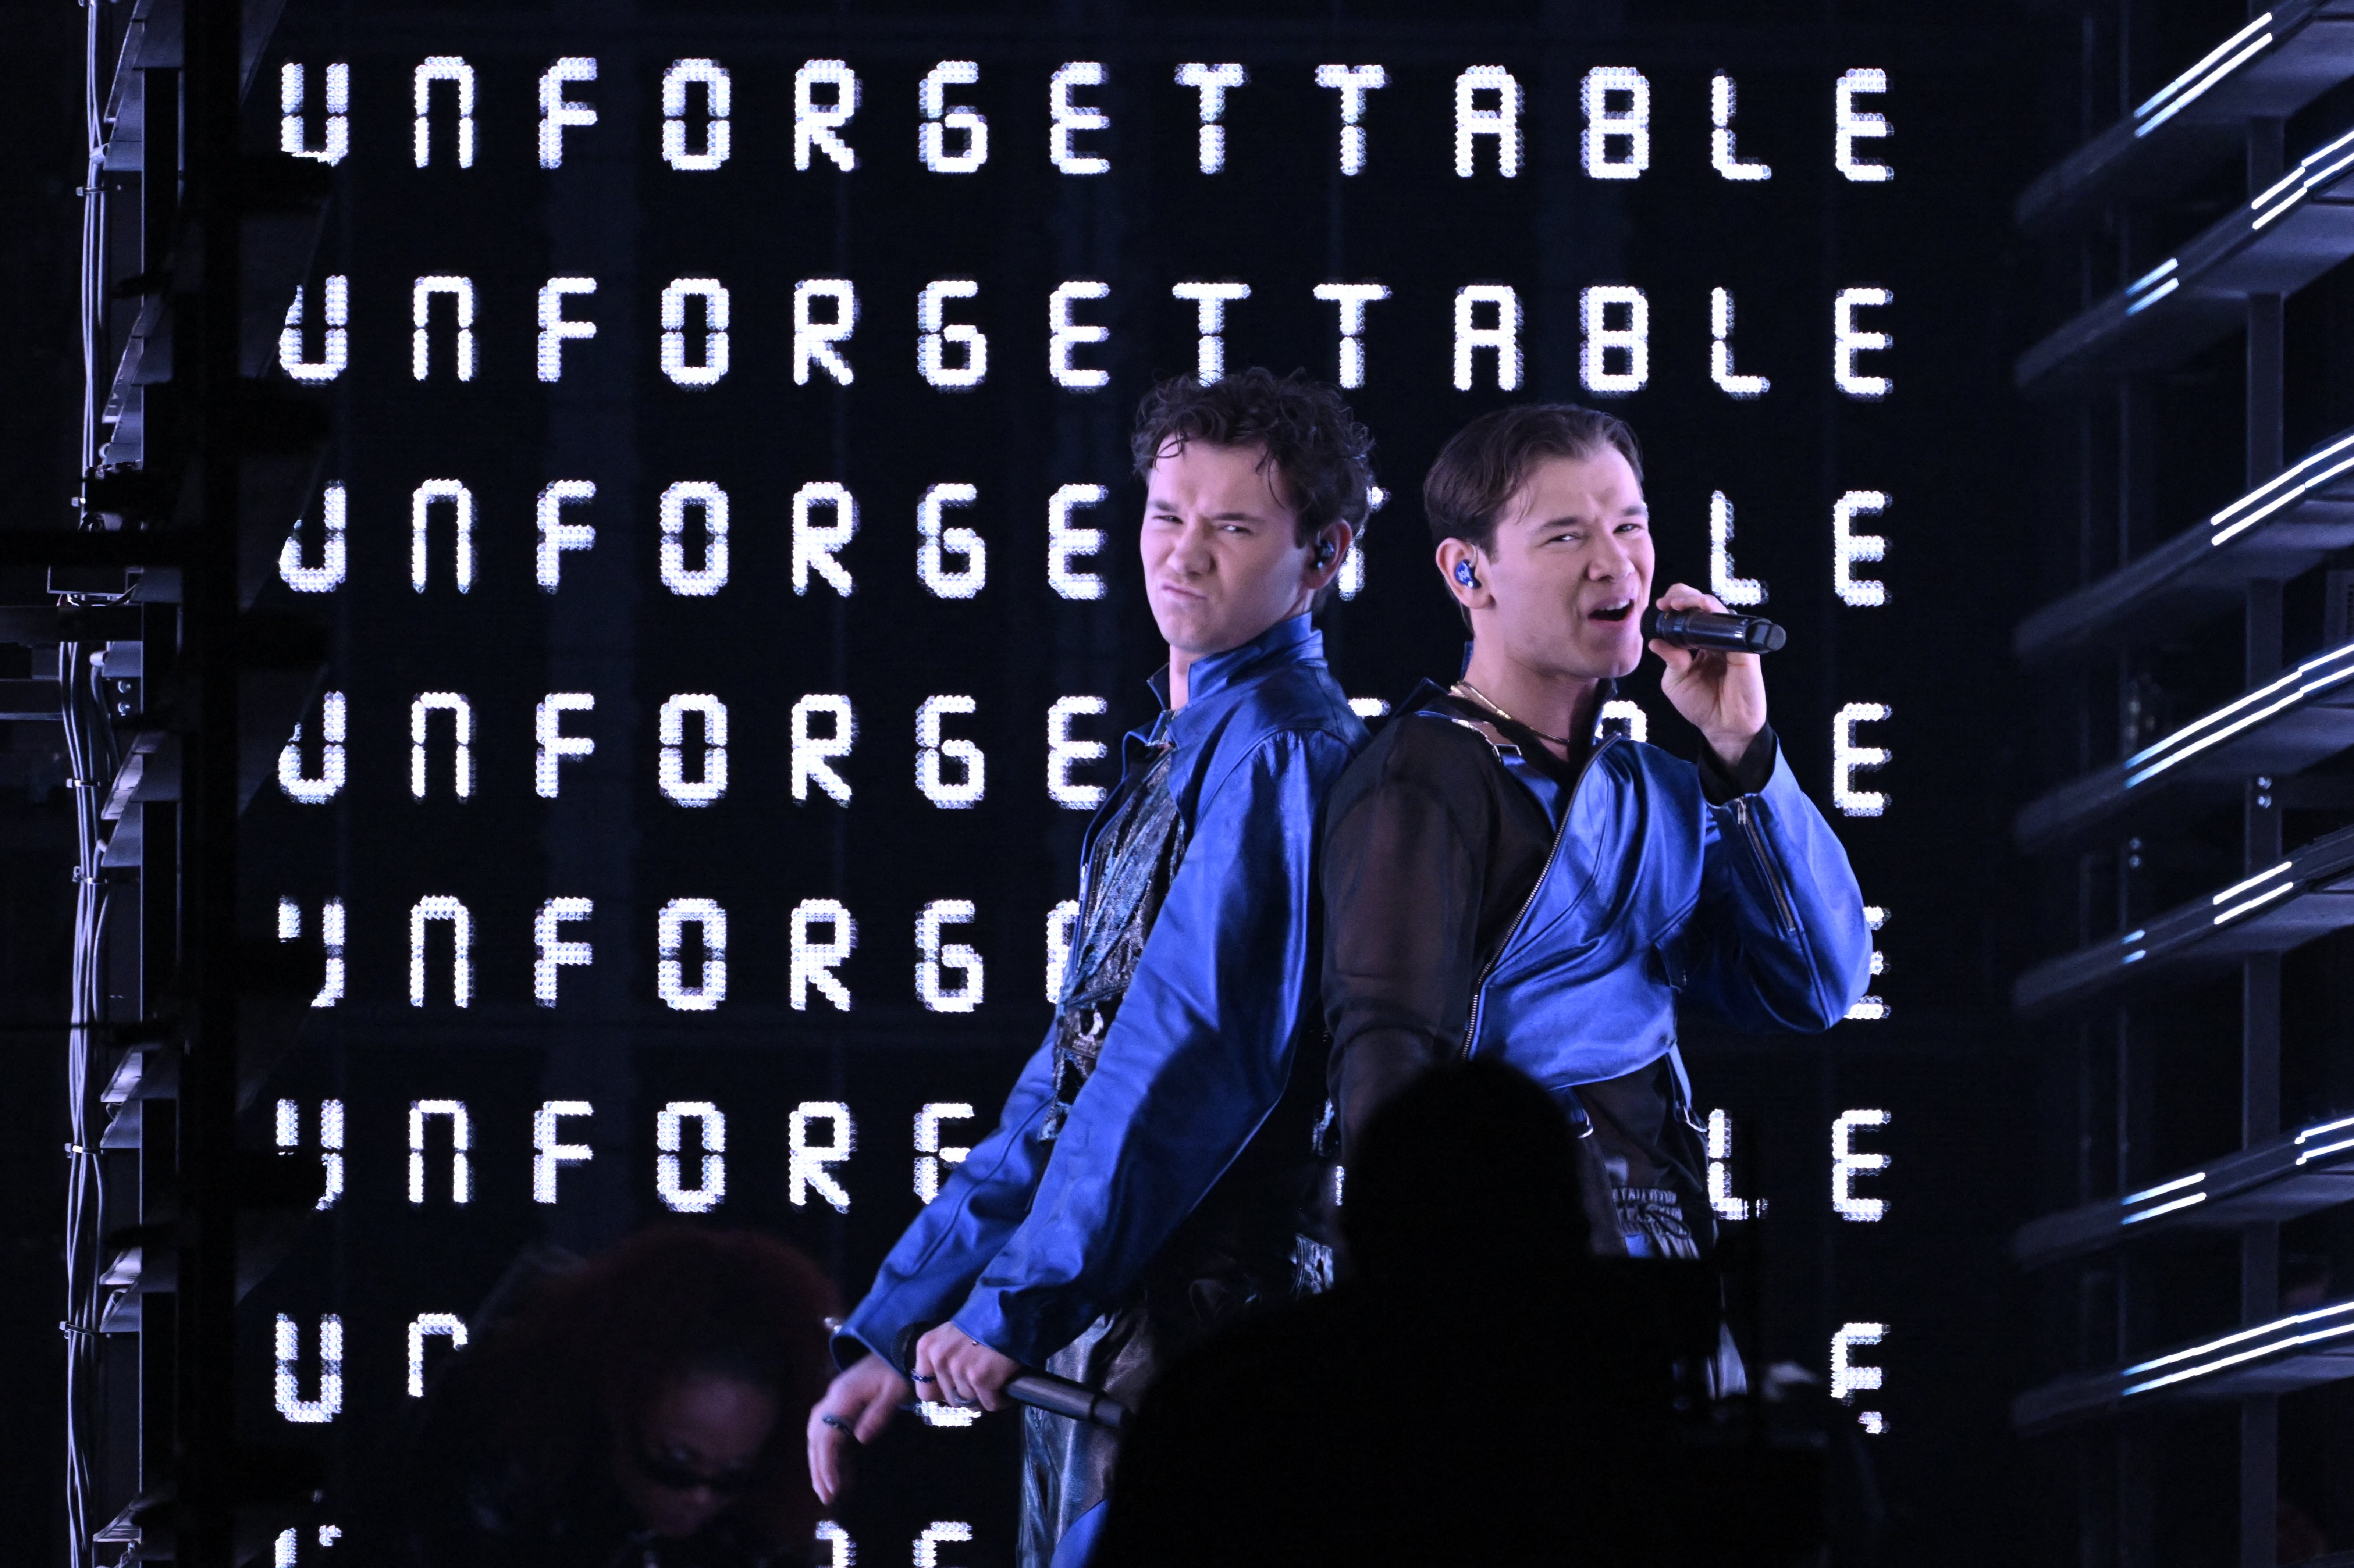 Marcus & Martinus performing ‘Unforgettable'